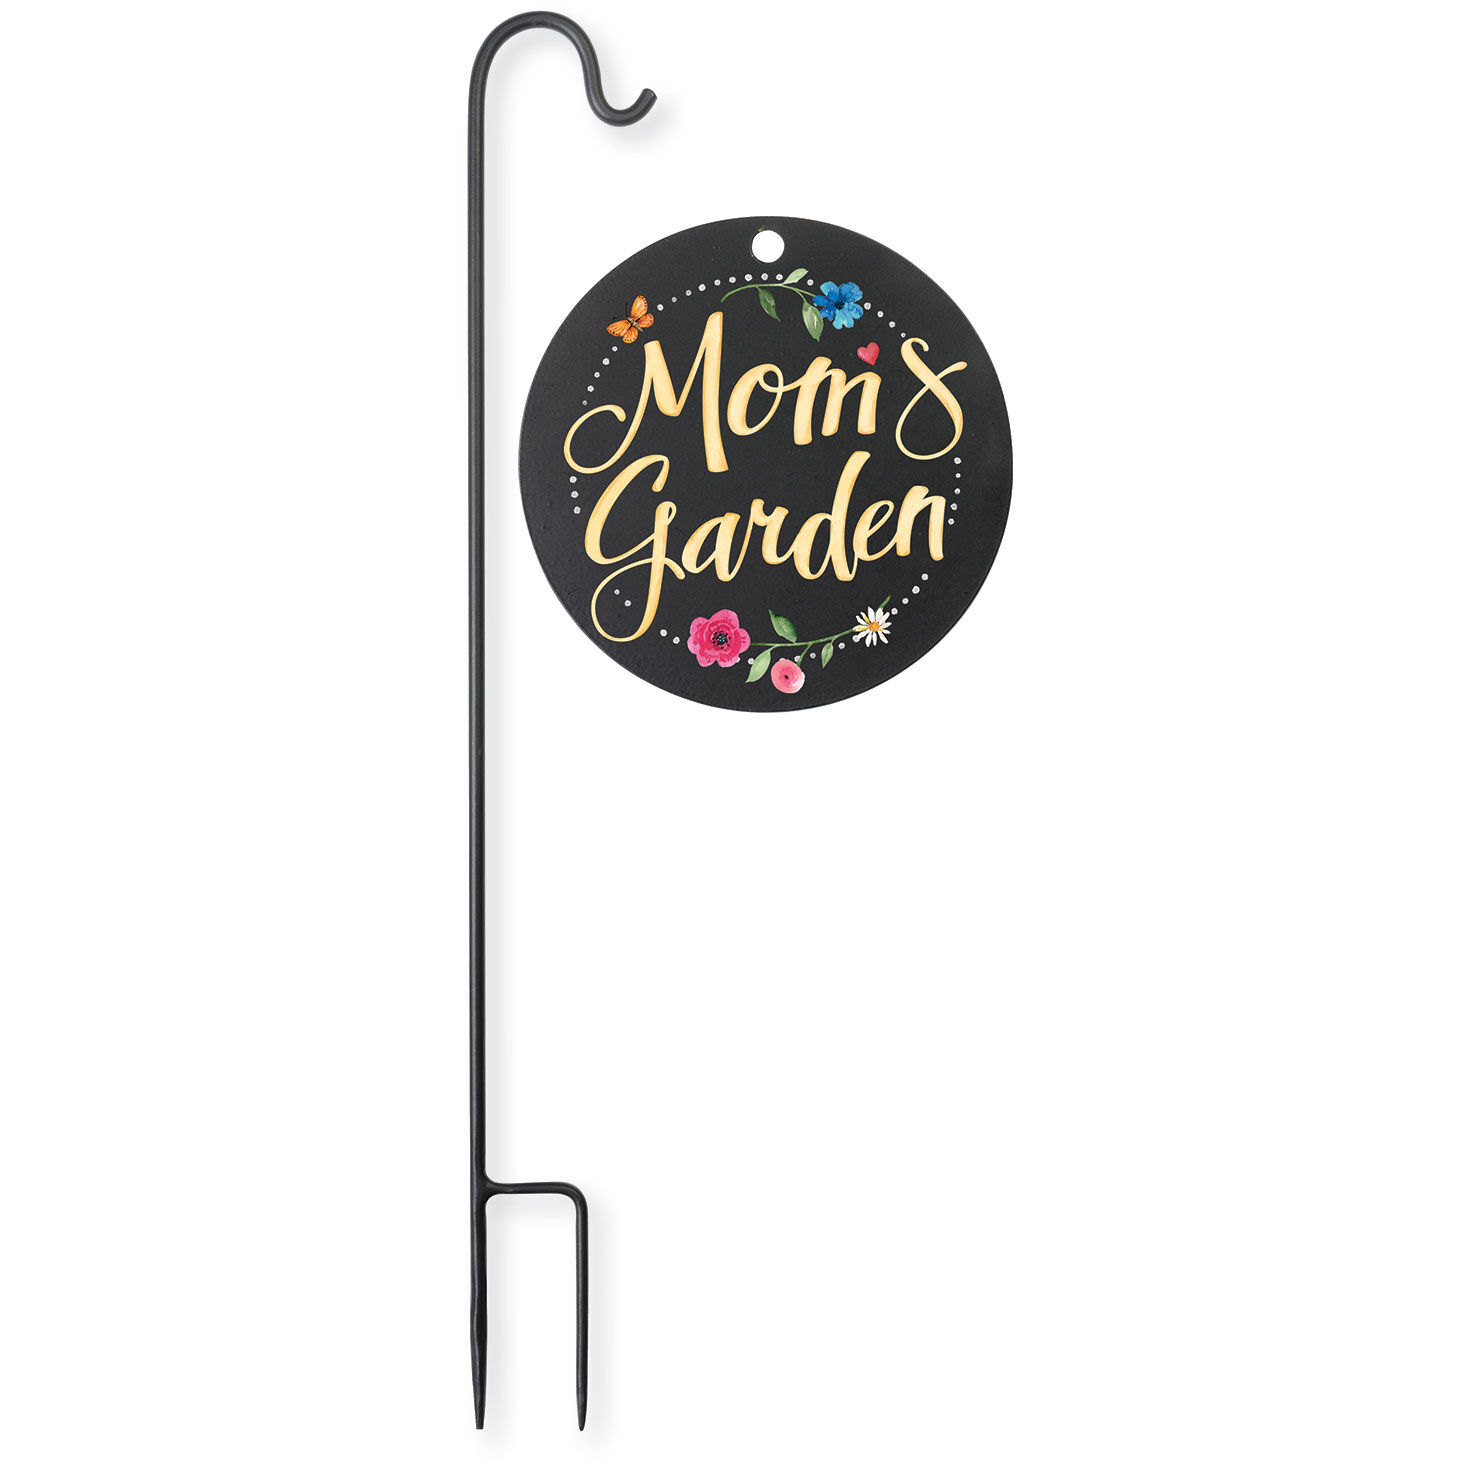 Carson Mom's Garden Round Garden Sign for only USD 14.99 | Hallmark